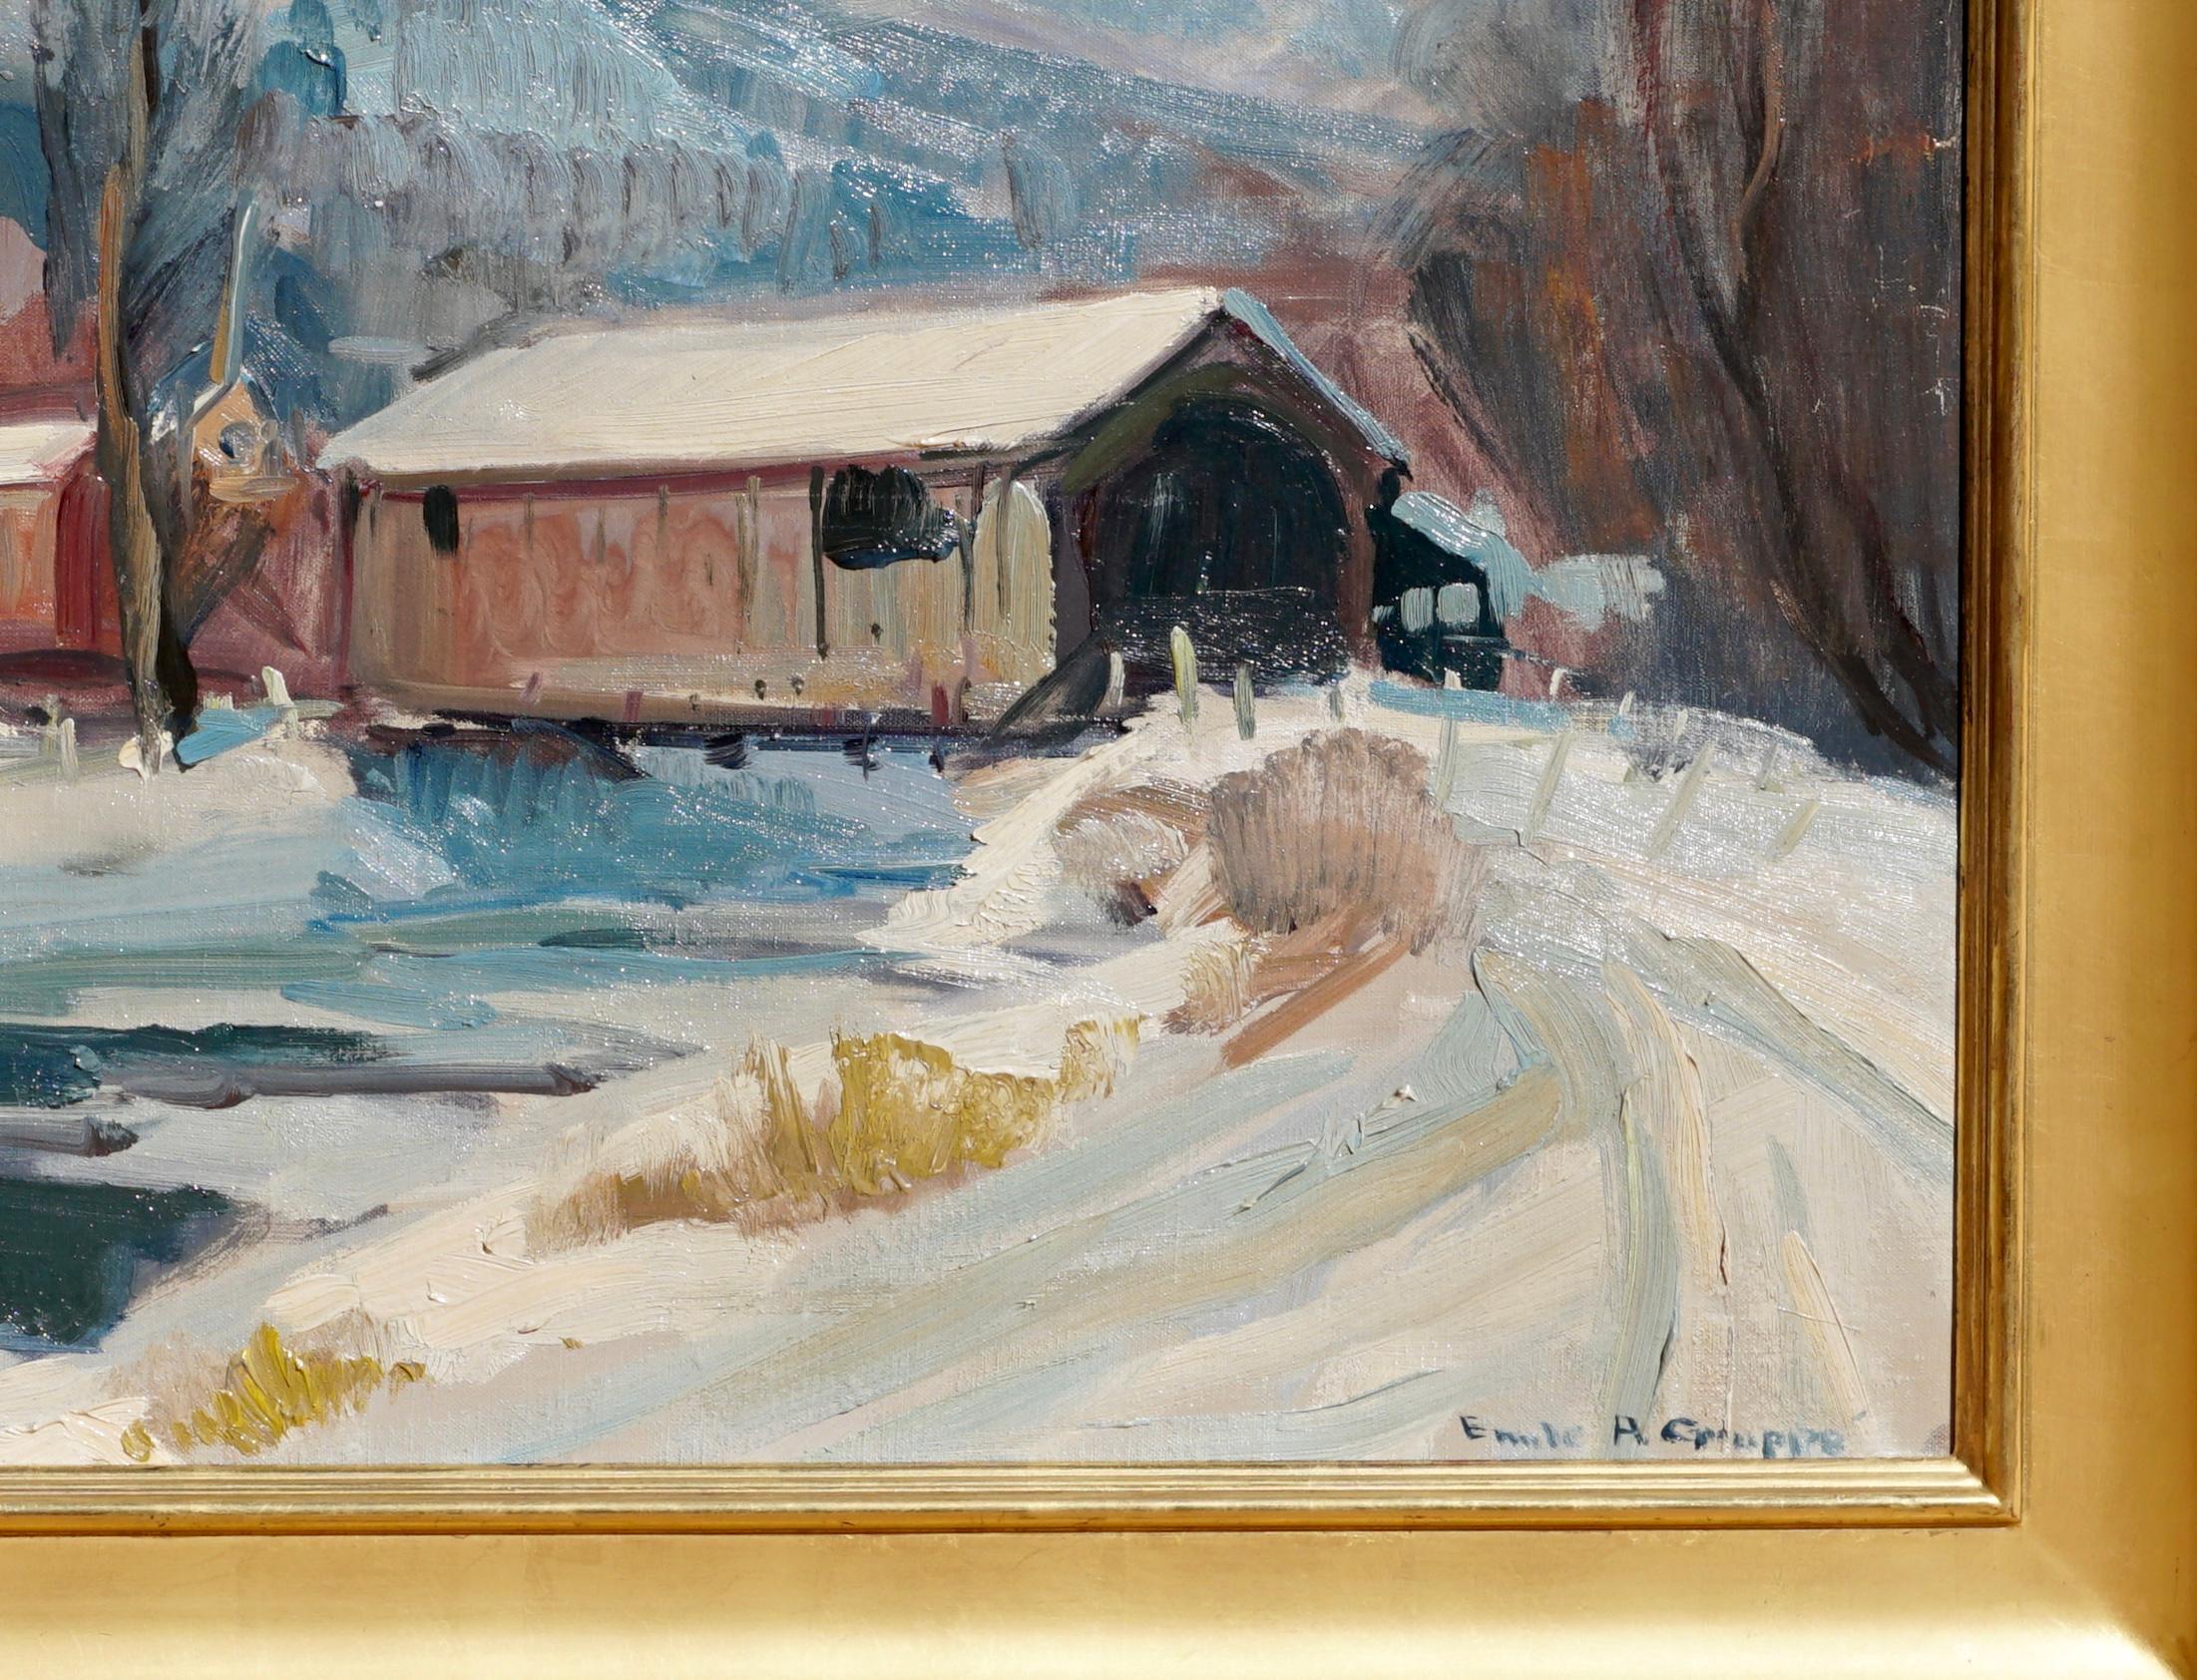 Hand-Painted Emile Albert Gruppe 'Mass 1896-1978' “Covered Bridge” Snow Painting